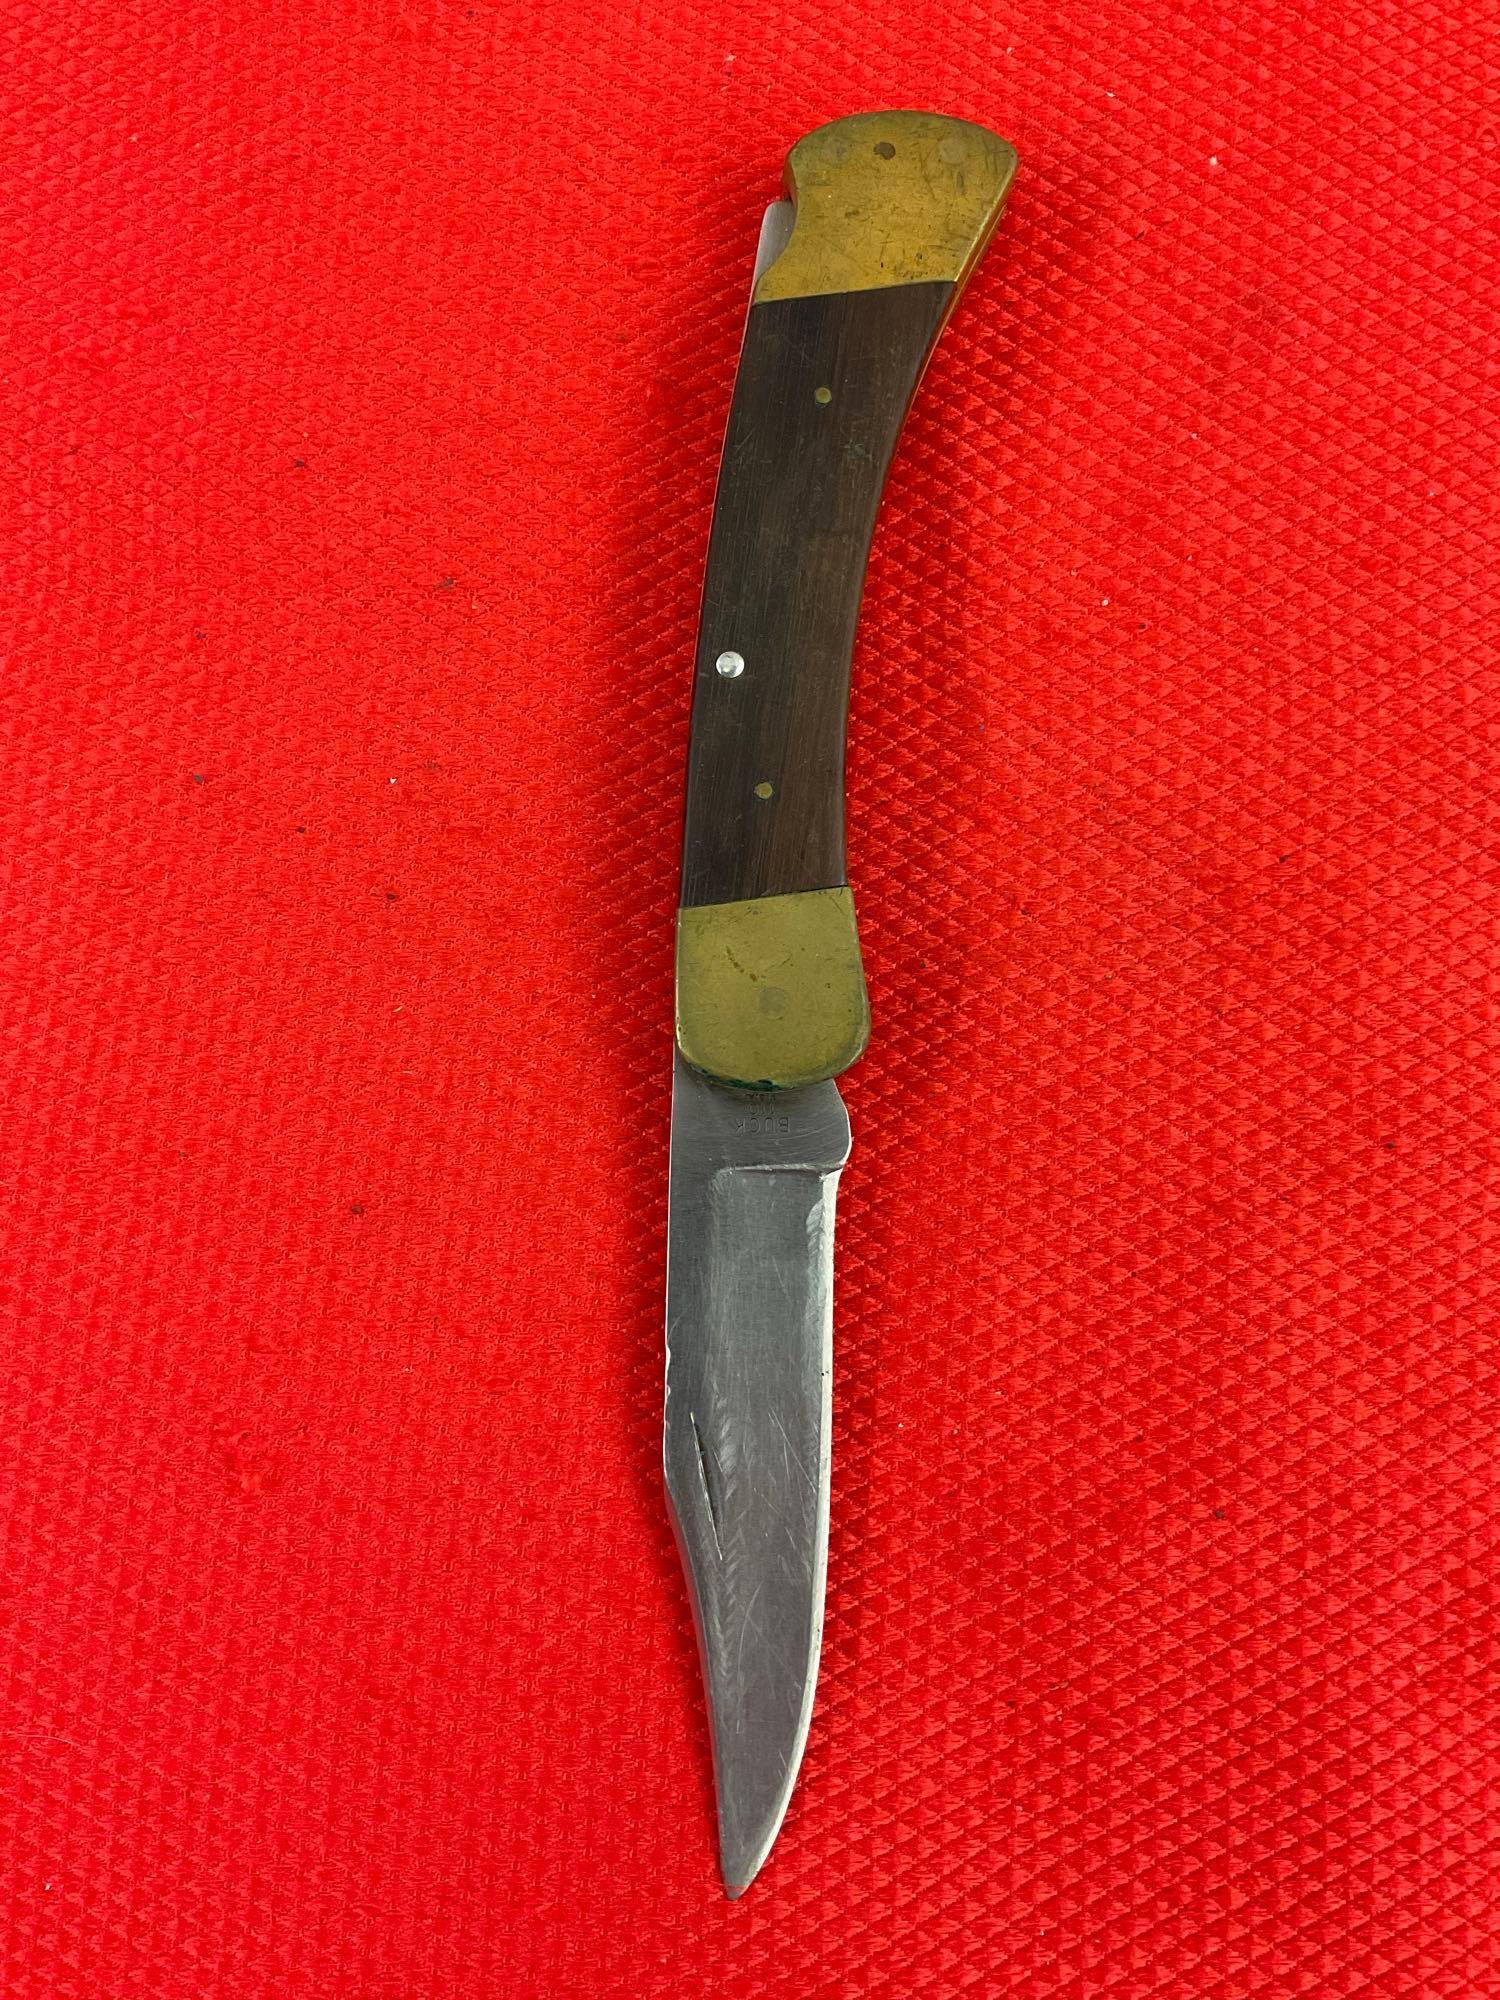 Vintage Buck 3.75" Steel Folding Blade Pocket Knife Model 110 w/ Ebony Handle & Original Sheath. ...